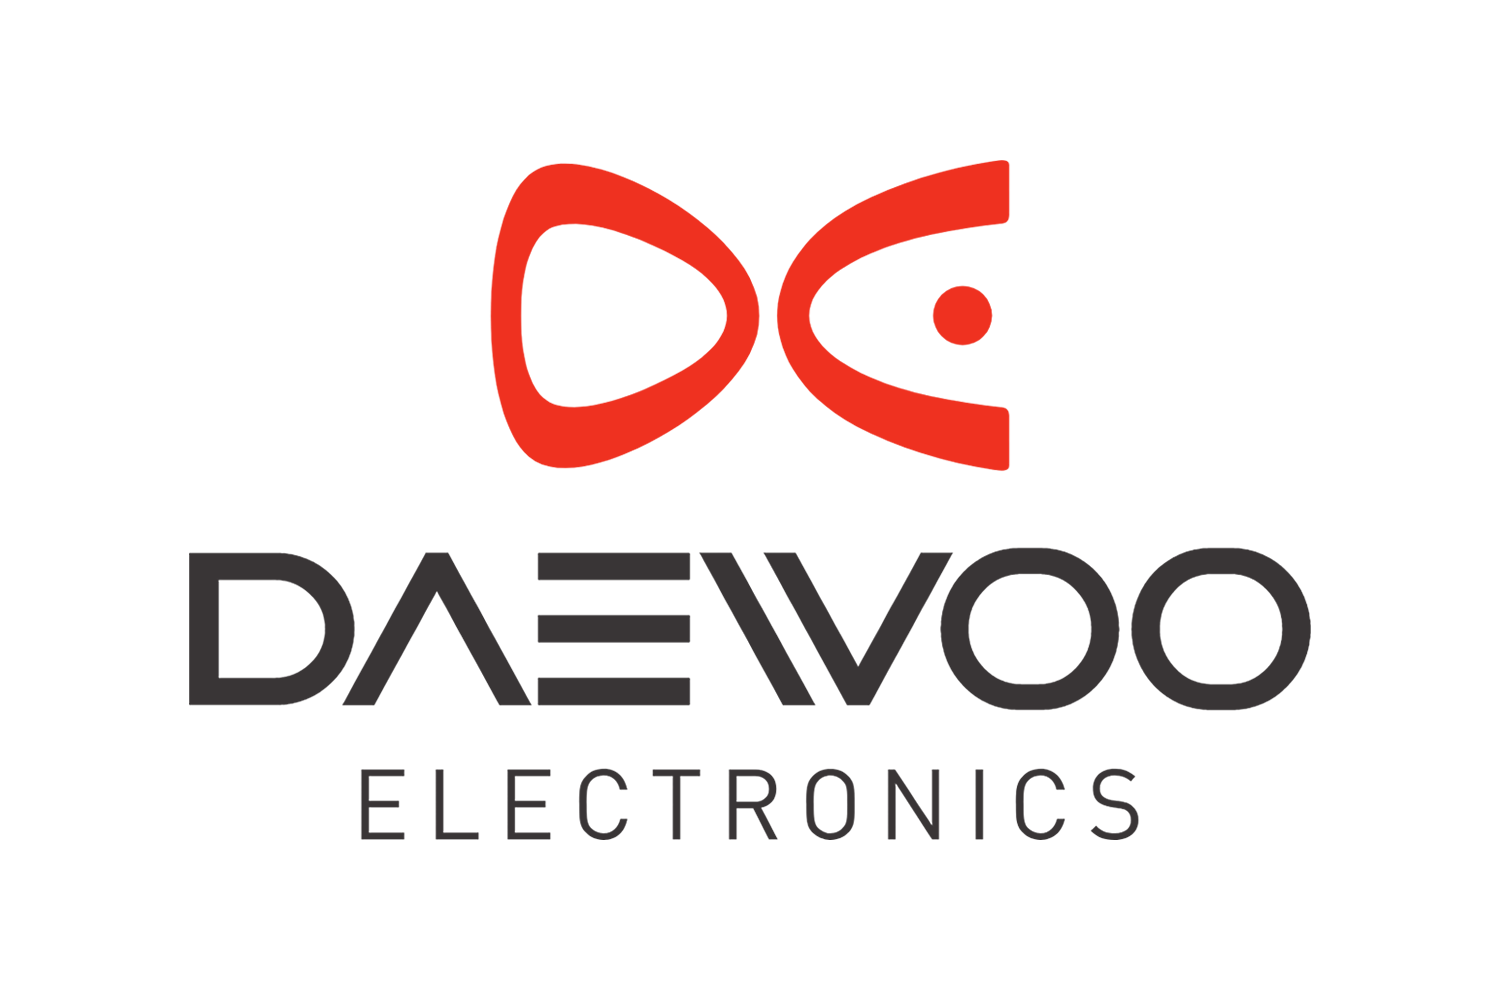 daewoo-electronics-logo